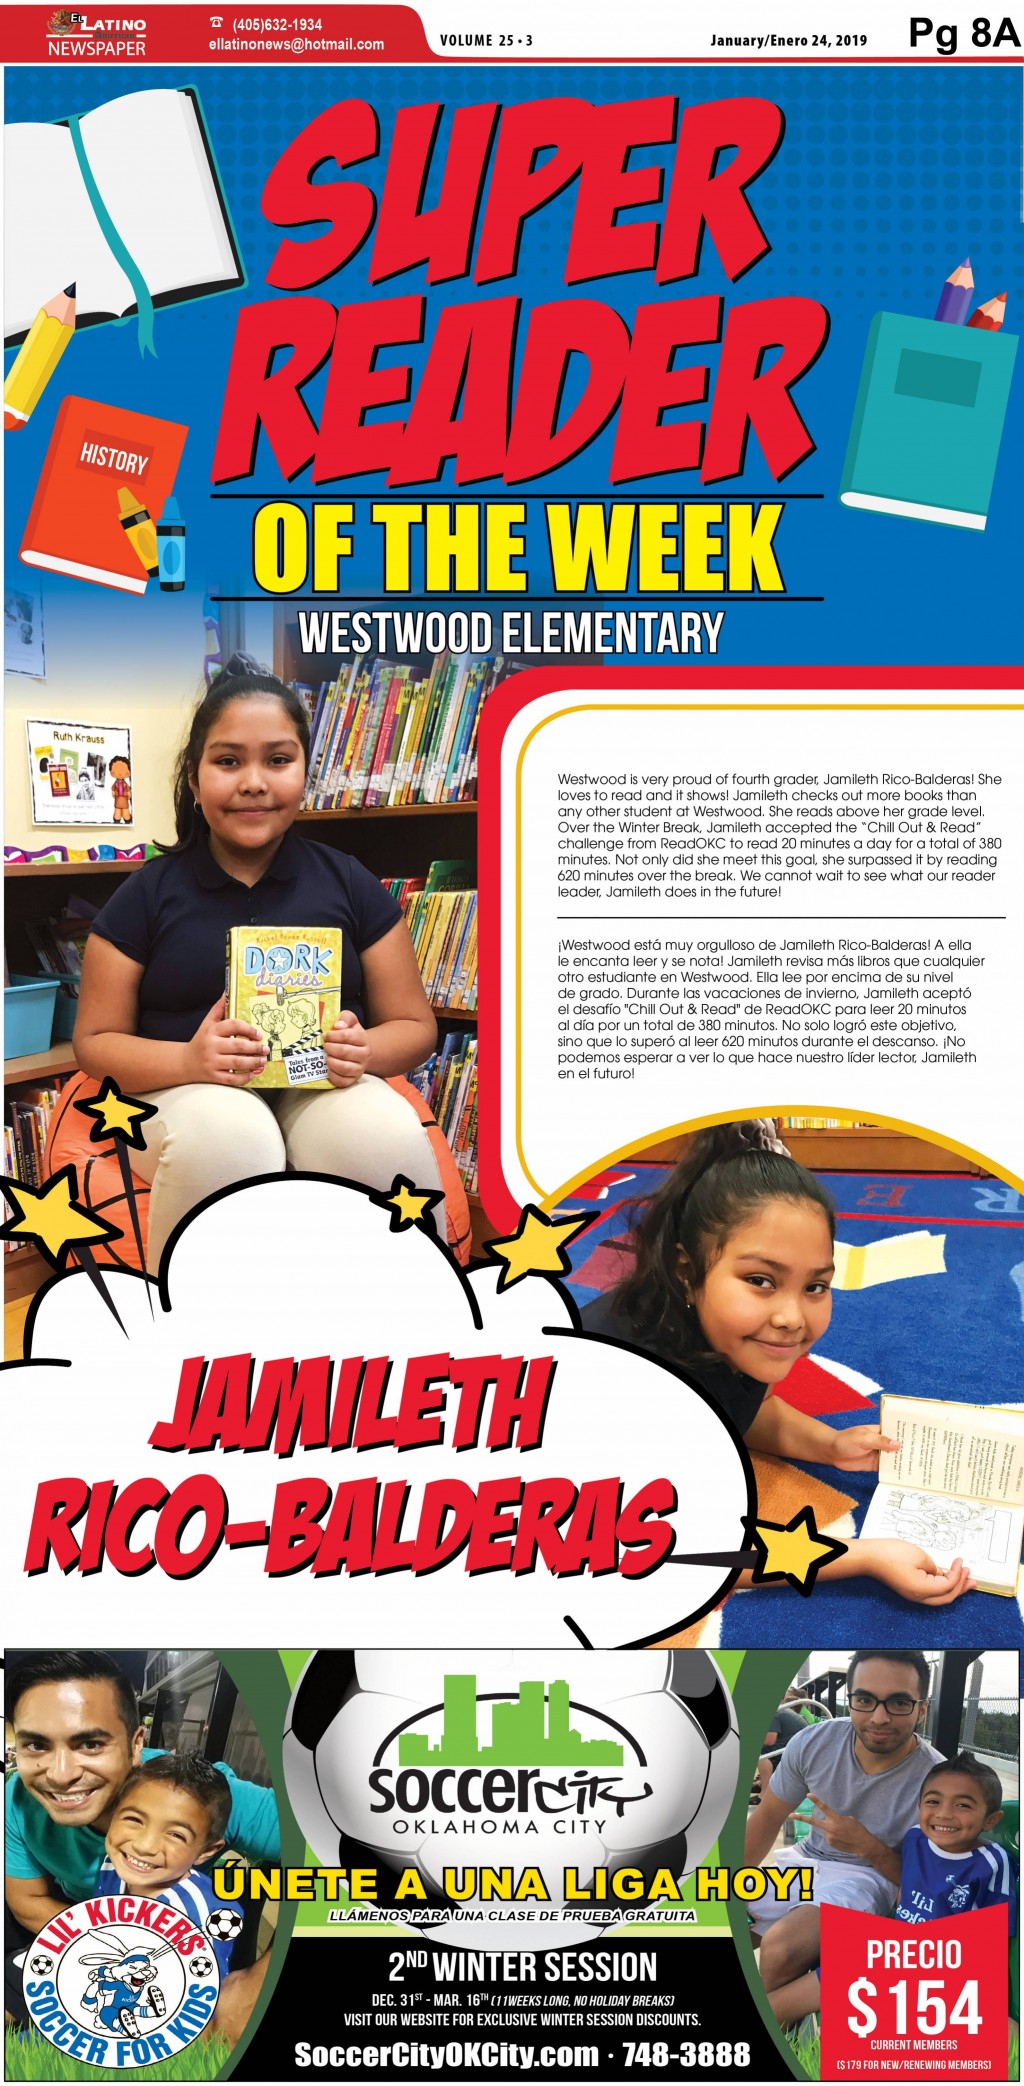 Super Reader of the Week: Jamileth Rico - Balderas